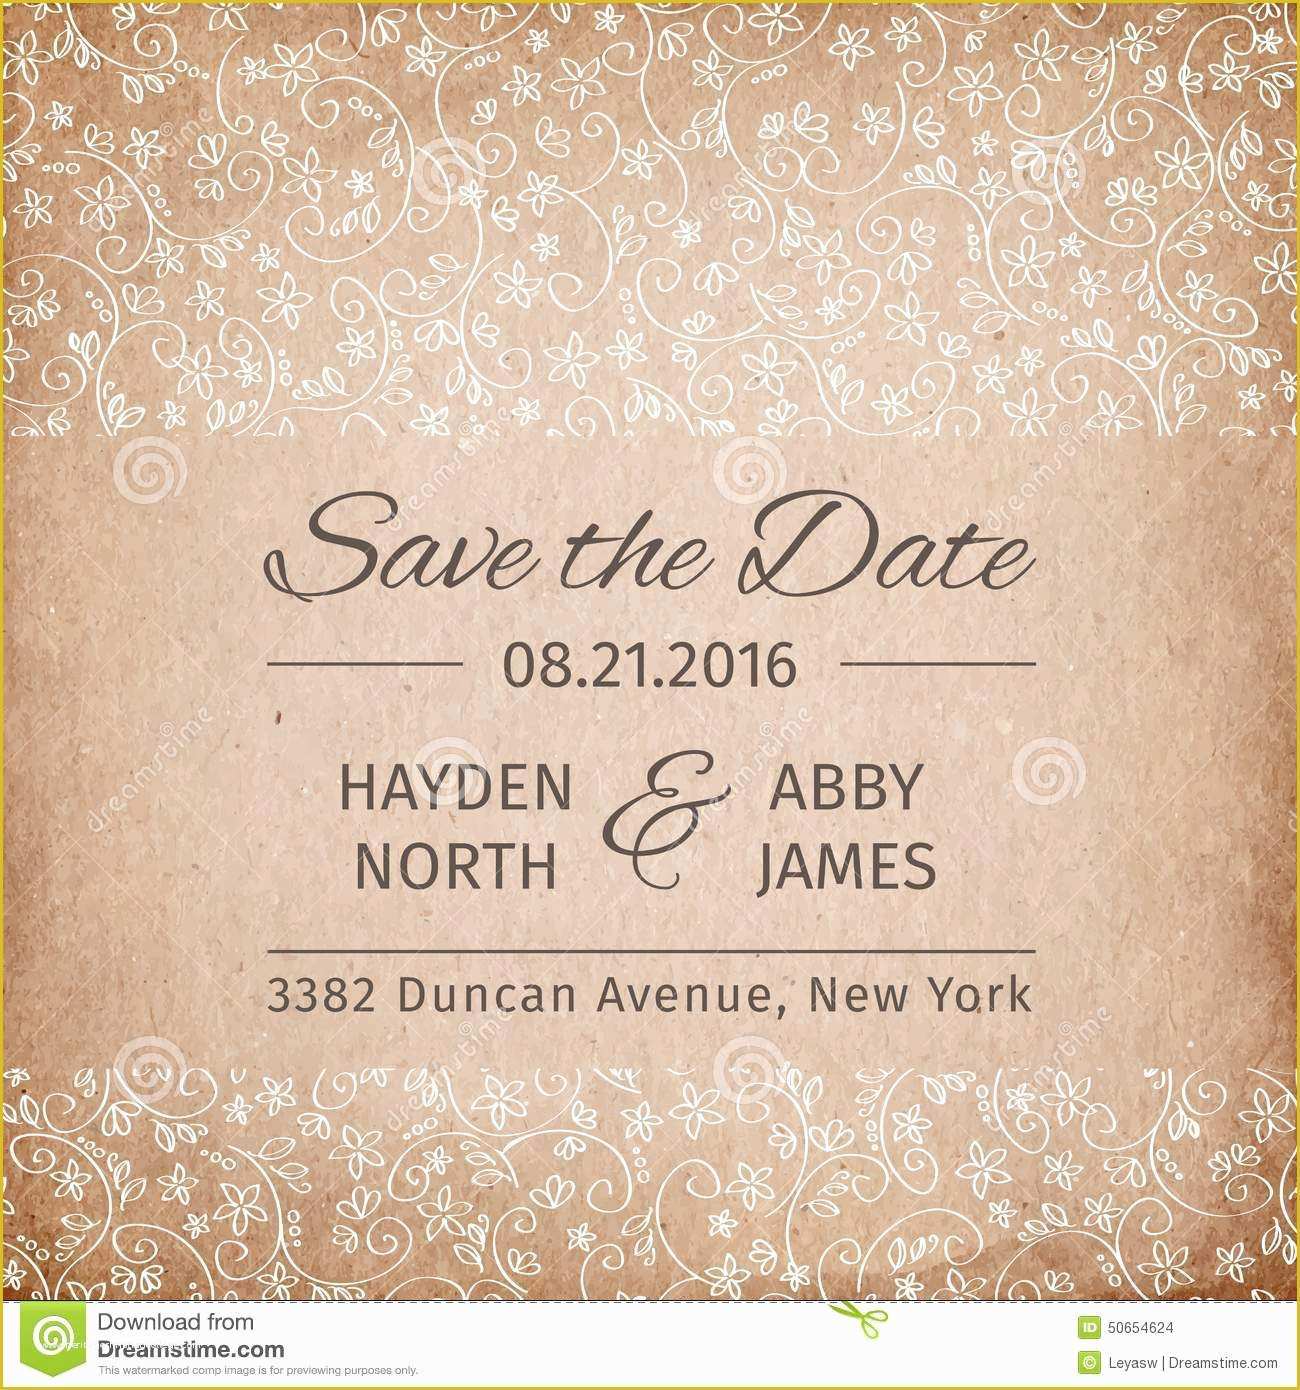 Free Save the Date Wedding Invitation Templates Of Paper Invitation Templates